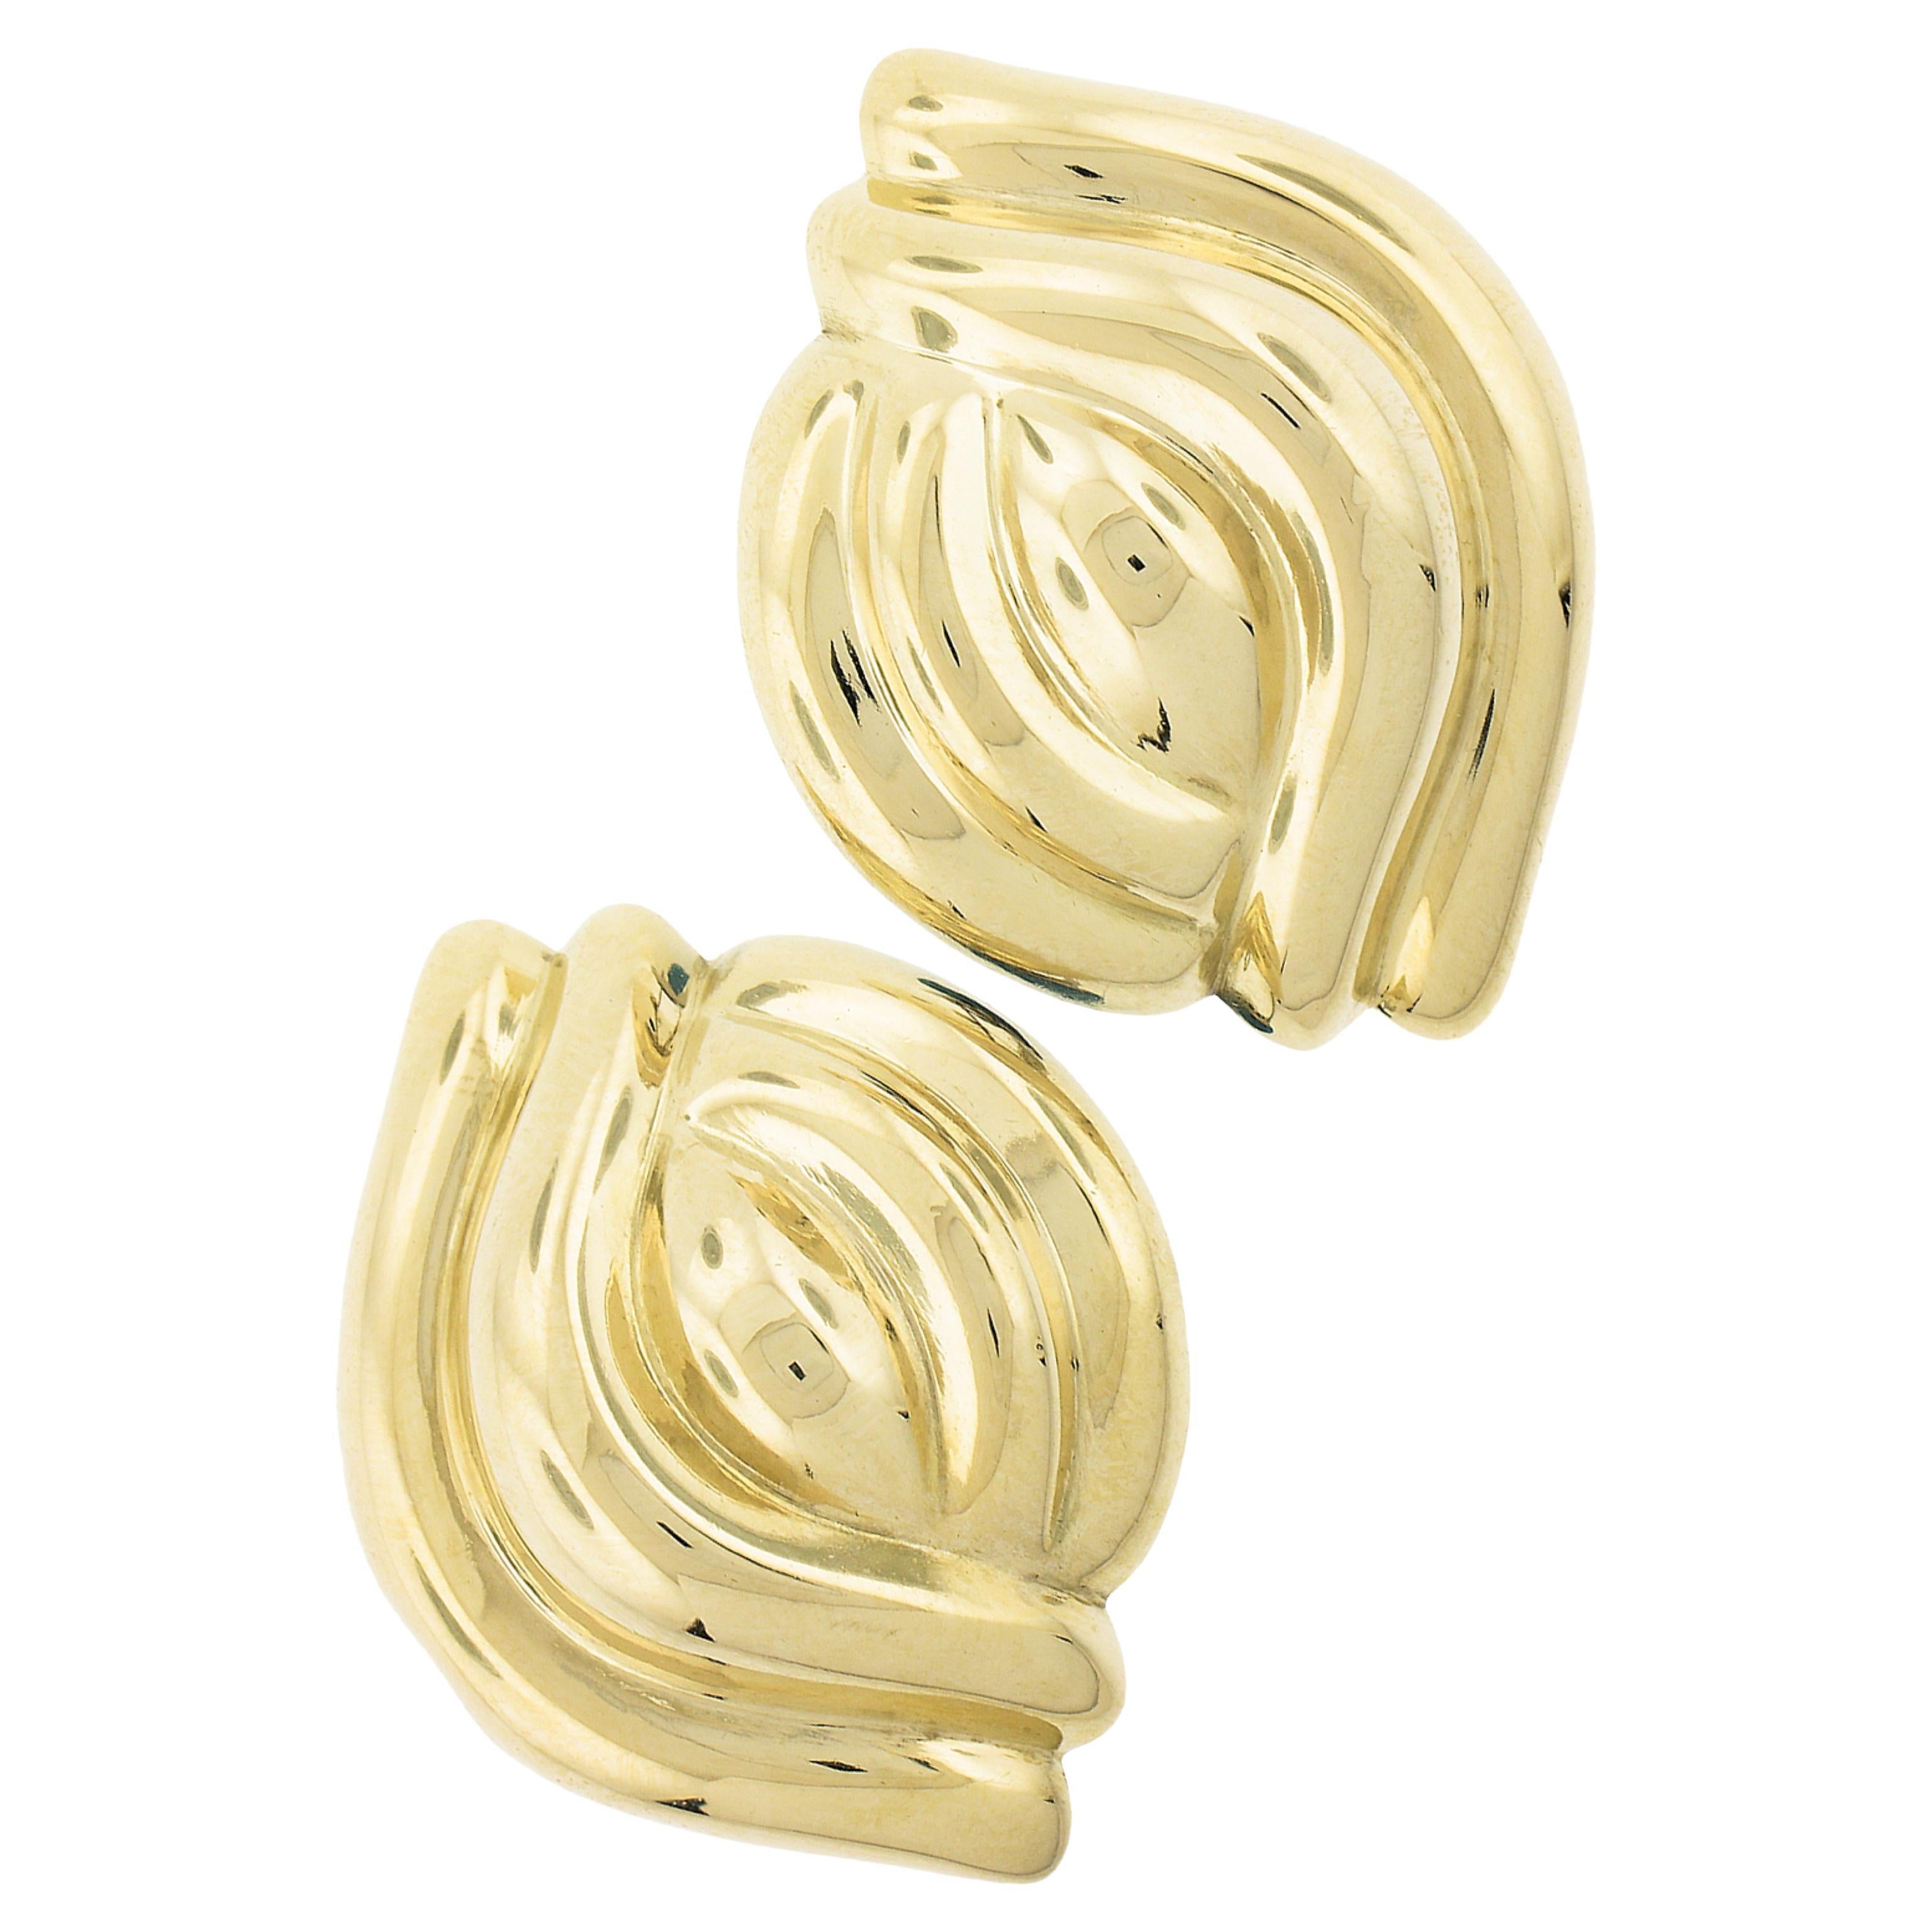 Tiffany & Co. 18K TT Gold Puffed Polished Finish Puffed Design Omega Earrings For Sale